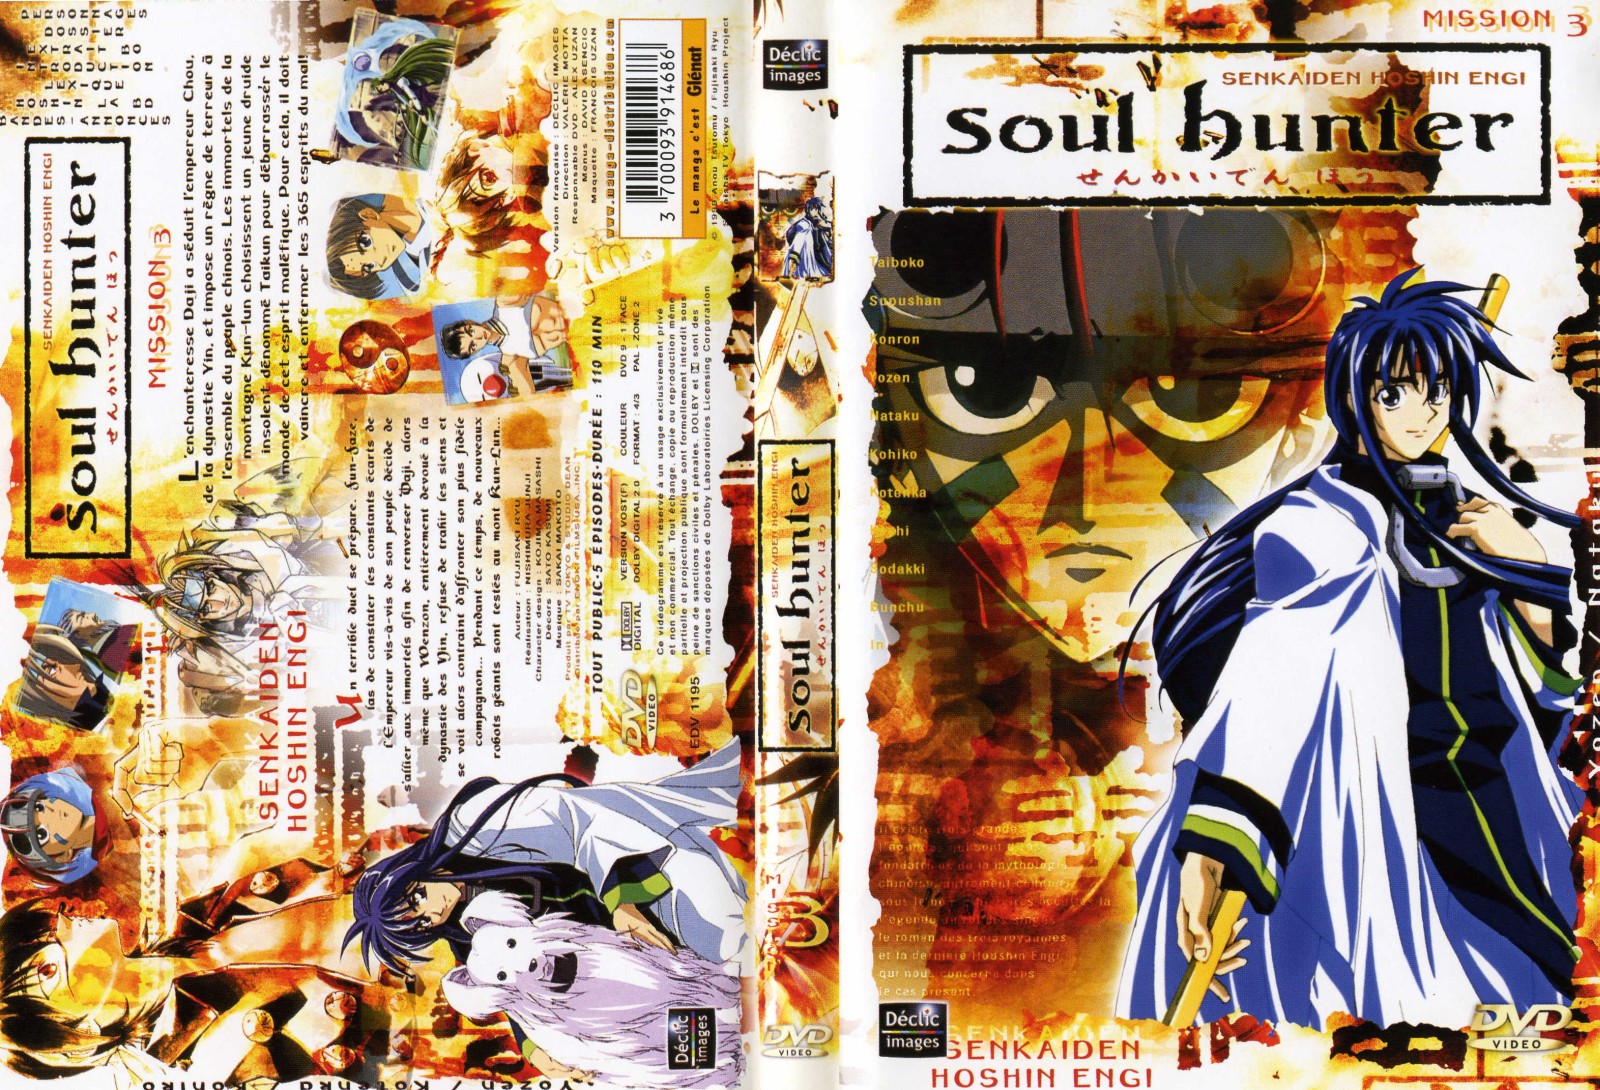 Jaquette DVD Soul hunter vol 3